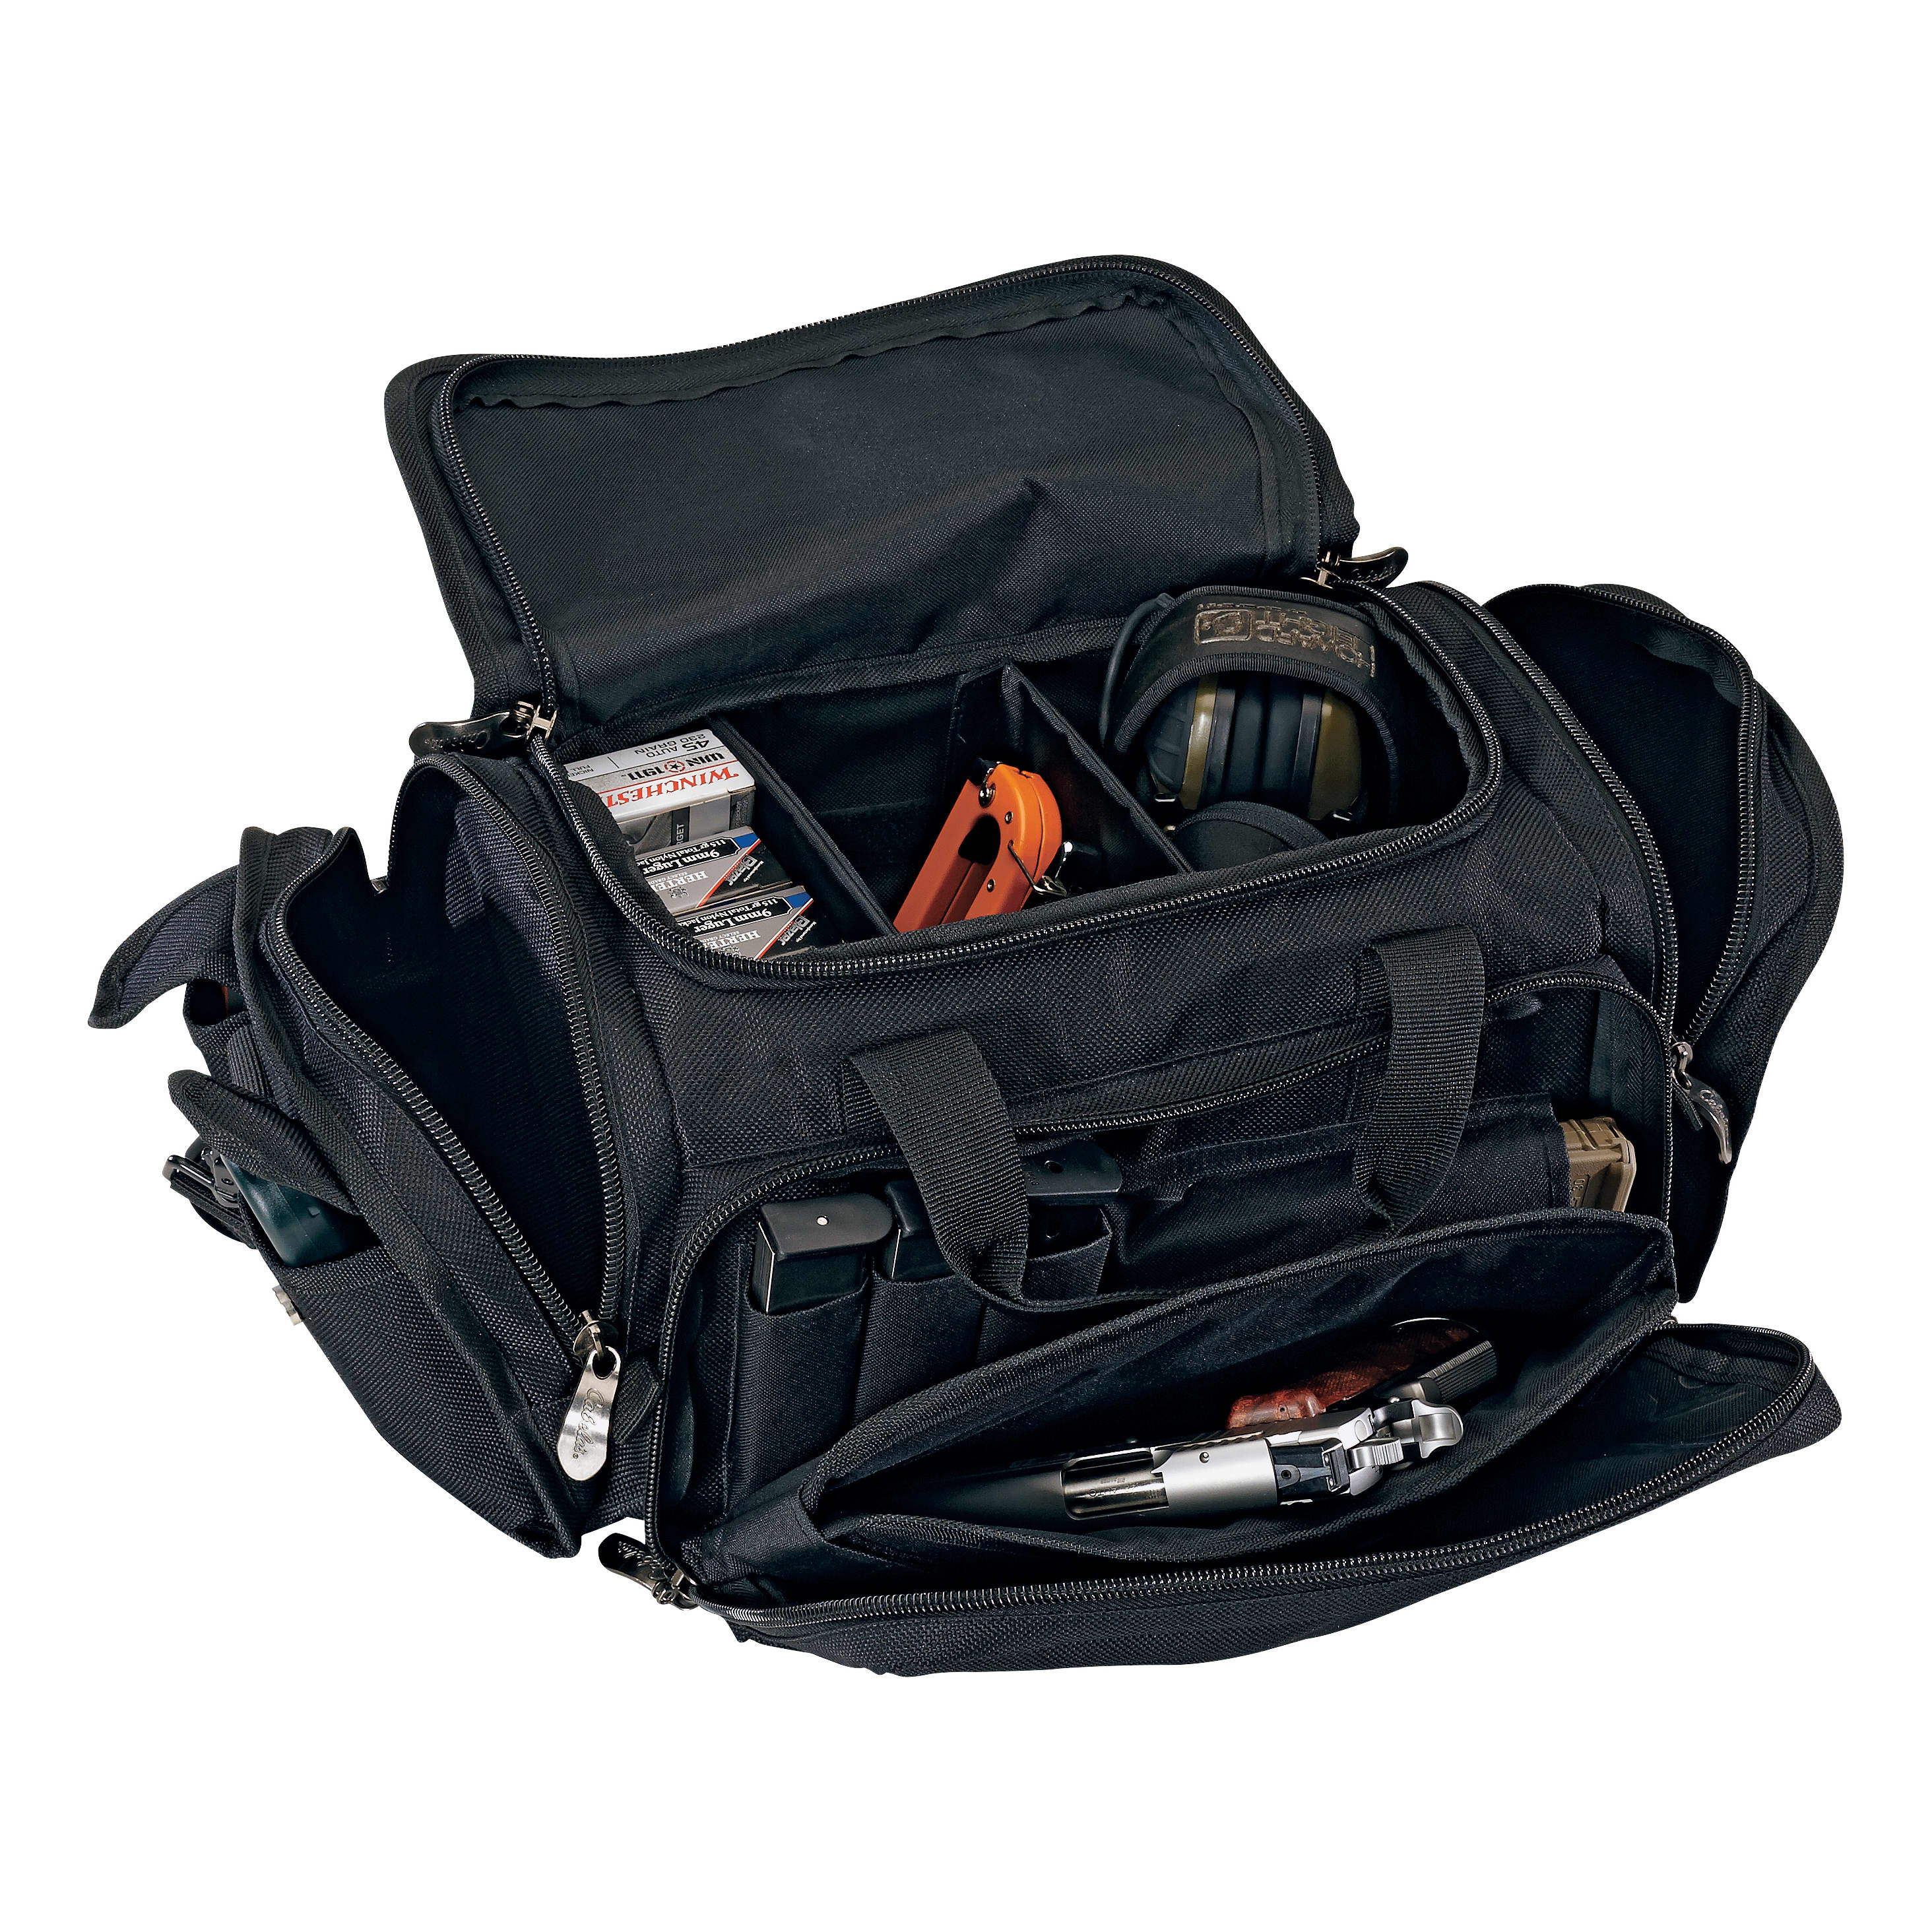 Cabela's Xtreme Range Bag - Three Exterior Zippered Compartments